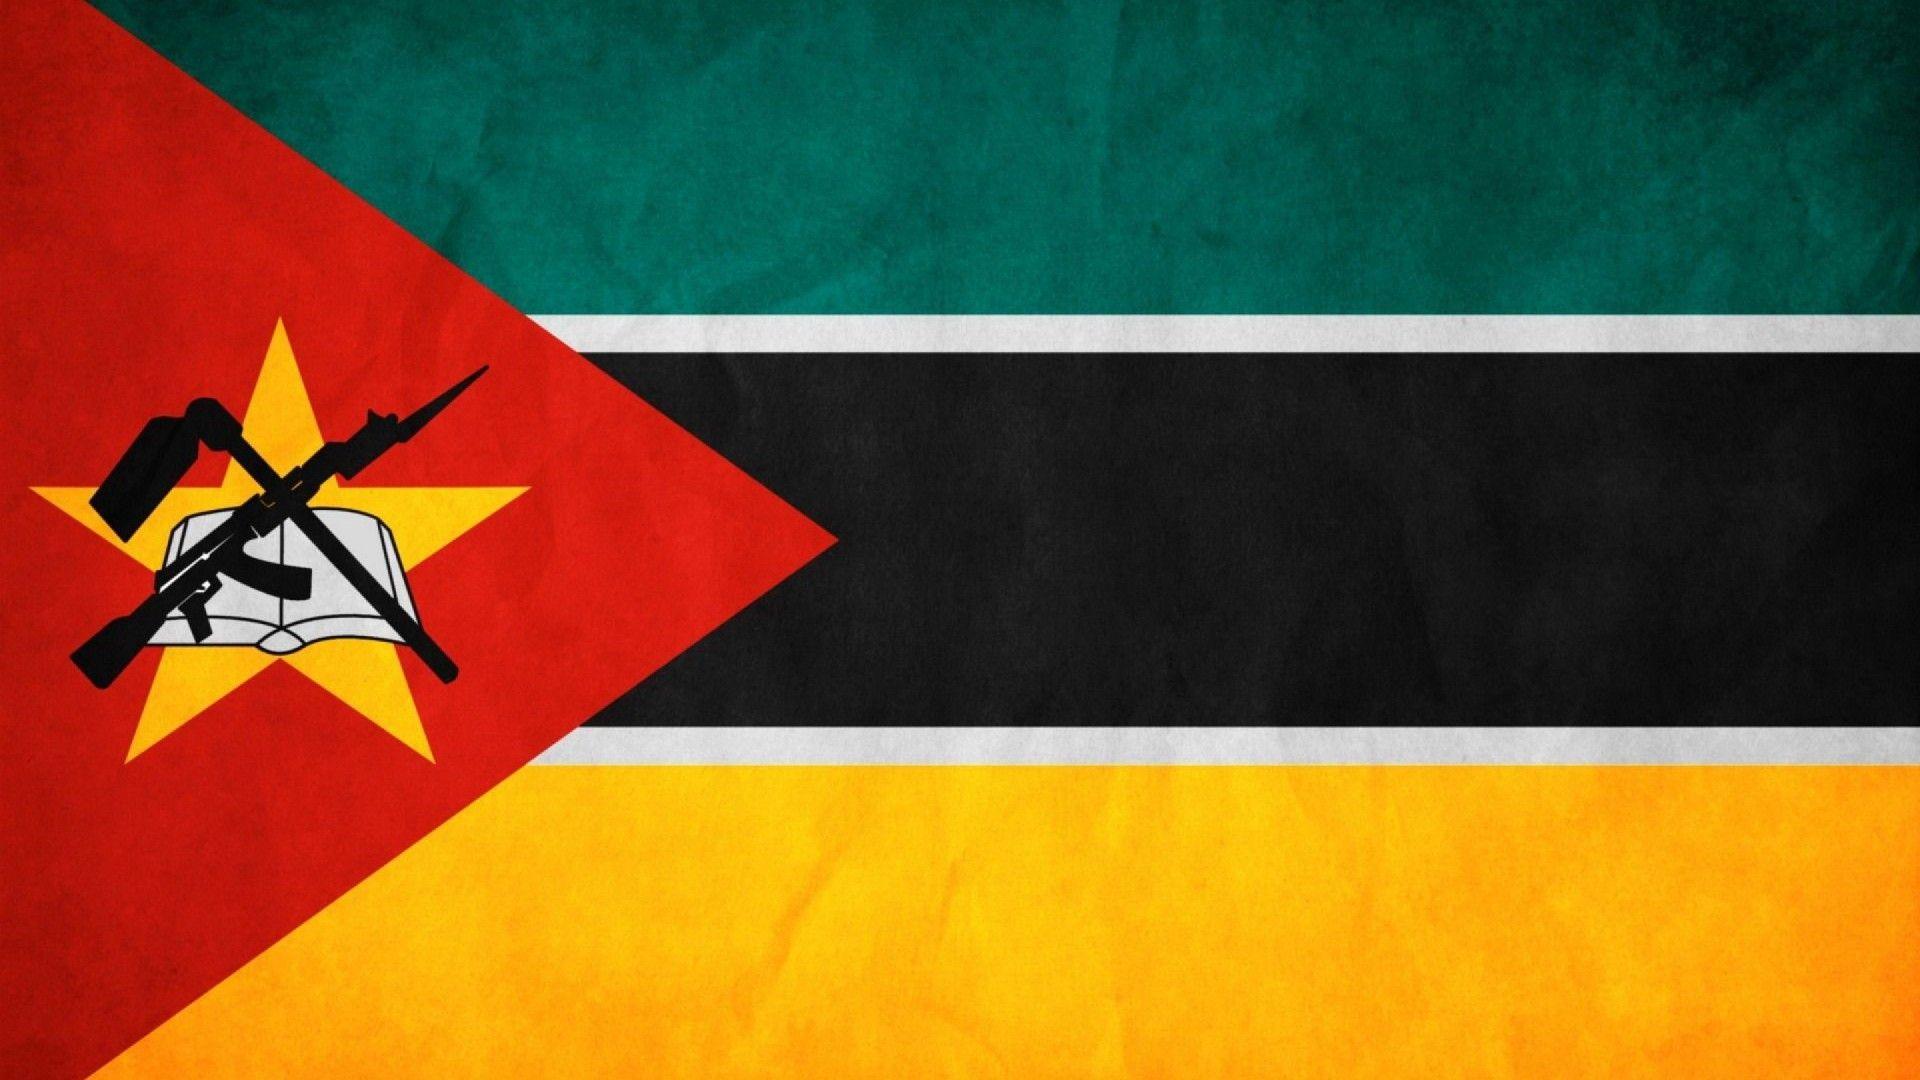 Mozambique Flag, High Definition, High Quality, Widescreen